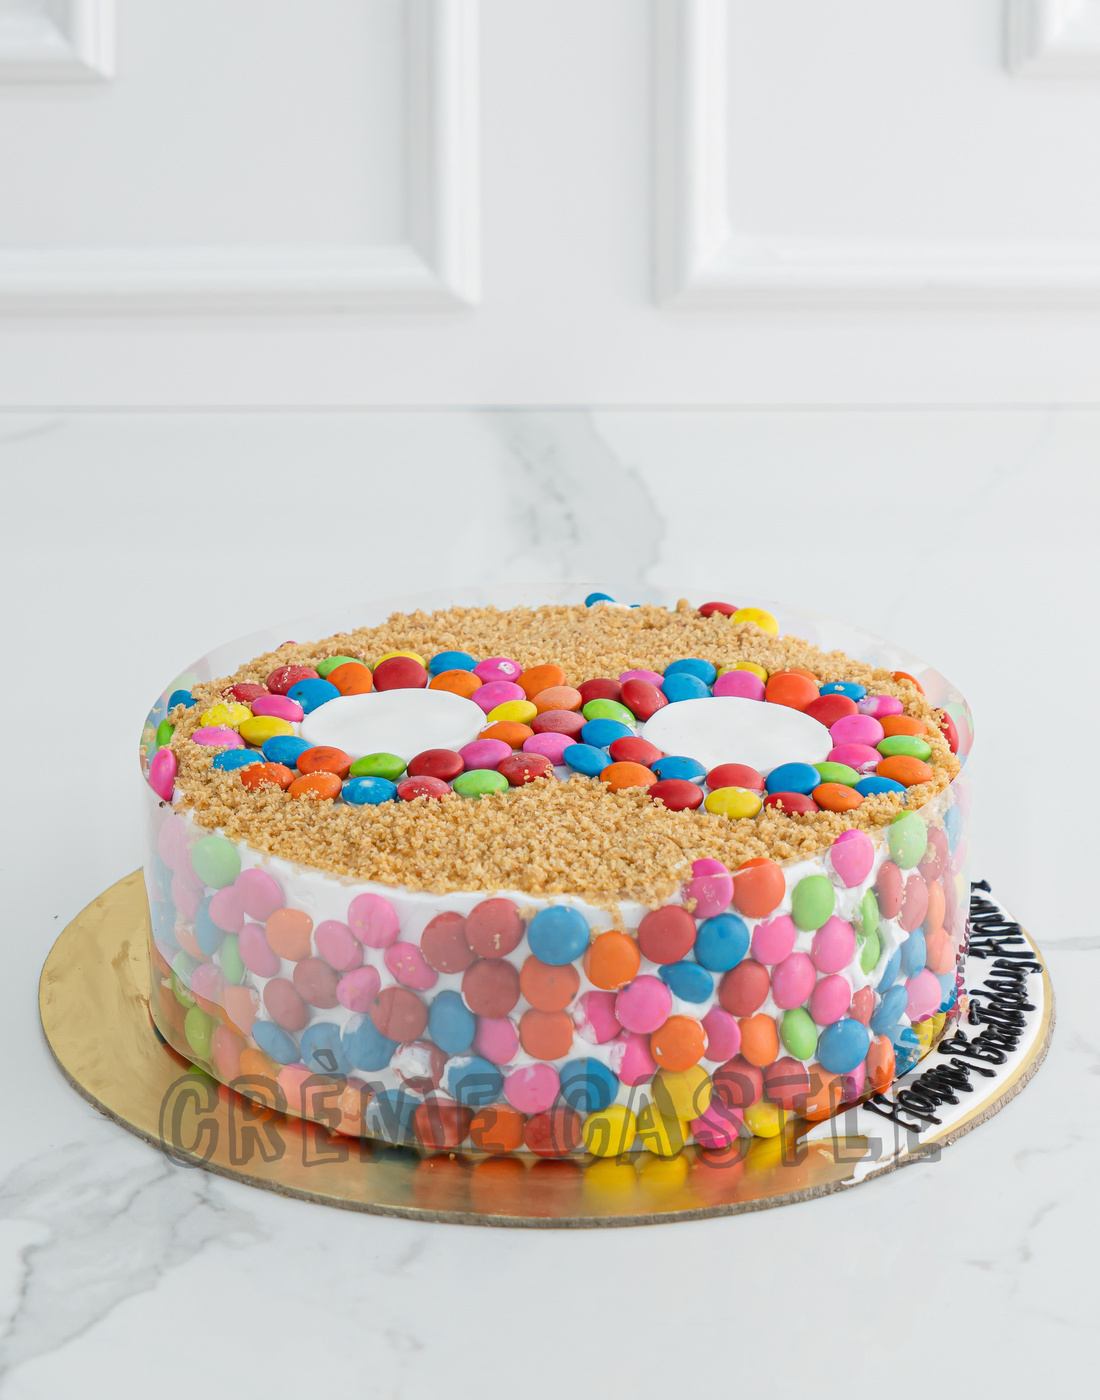 Gems cake | Gem cake, Cake designs, Cake